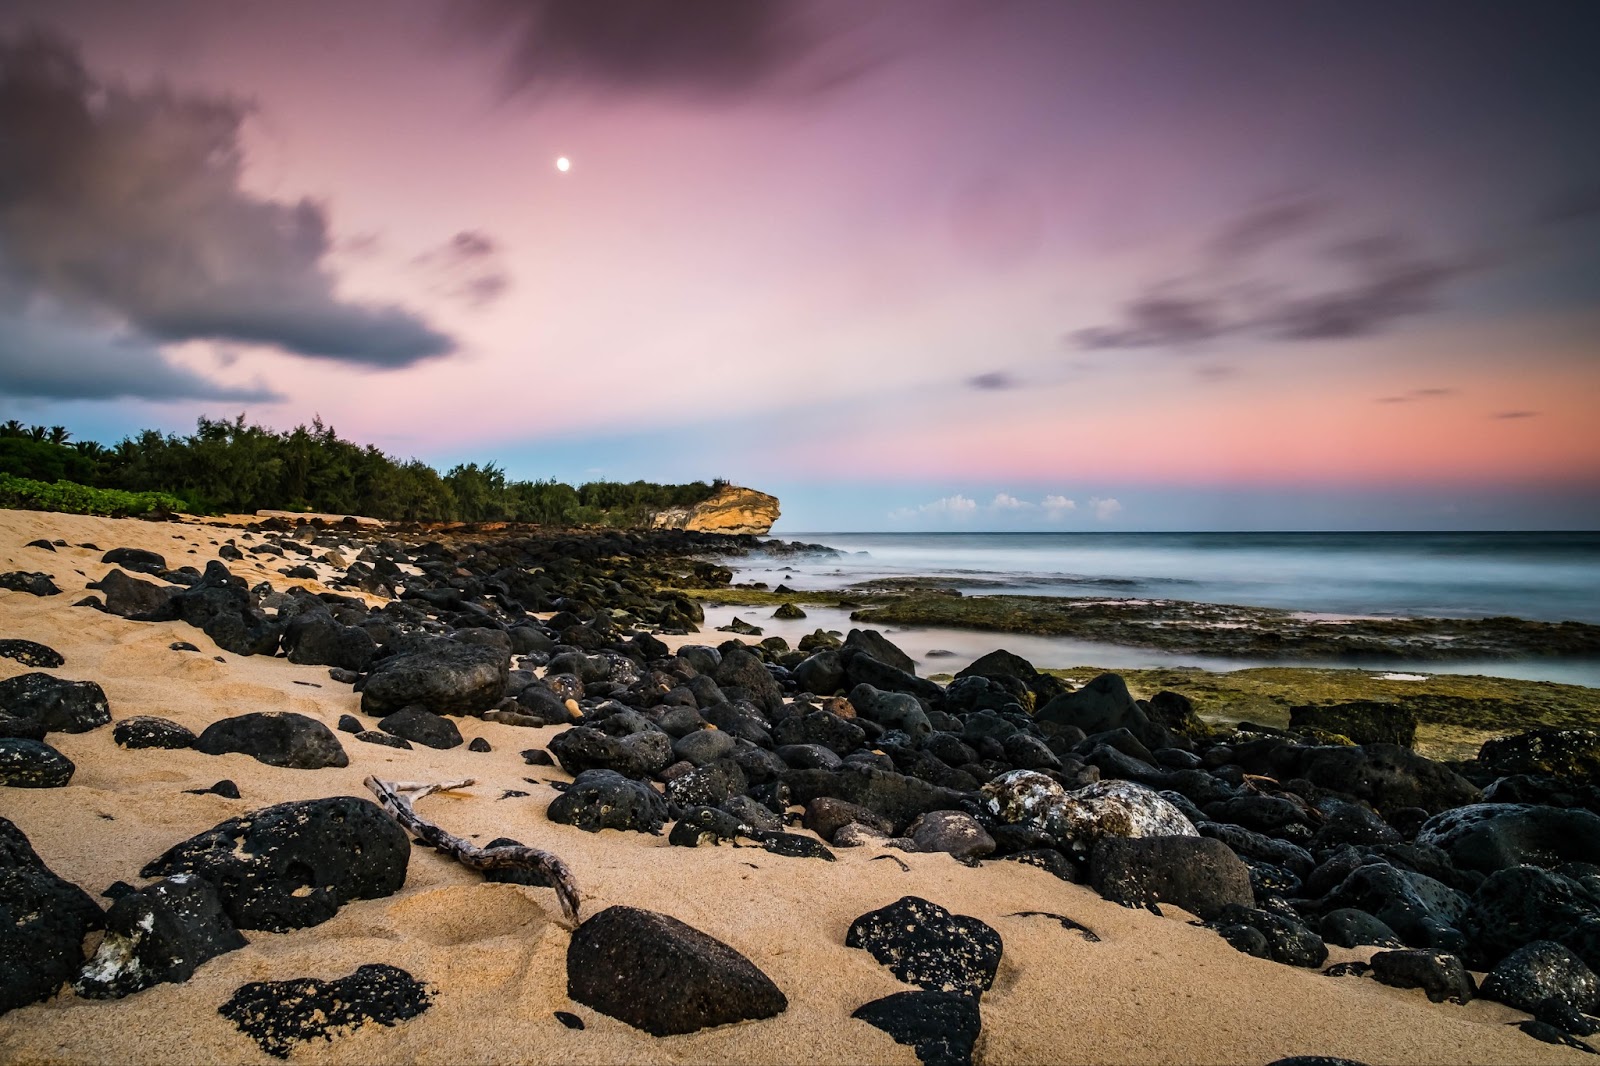 Awe-inspiring volcanic rock formations meeting the ocean in Hawaii.